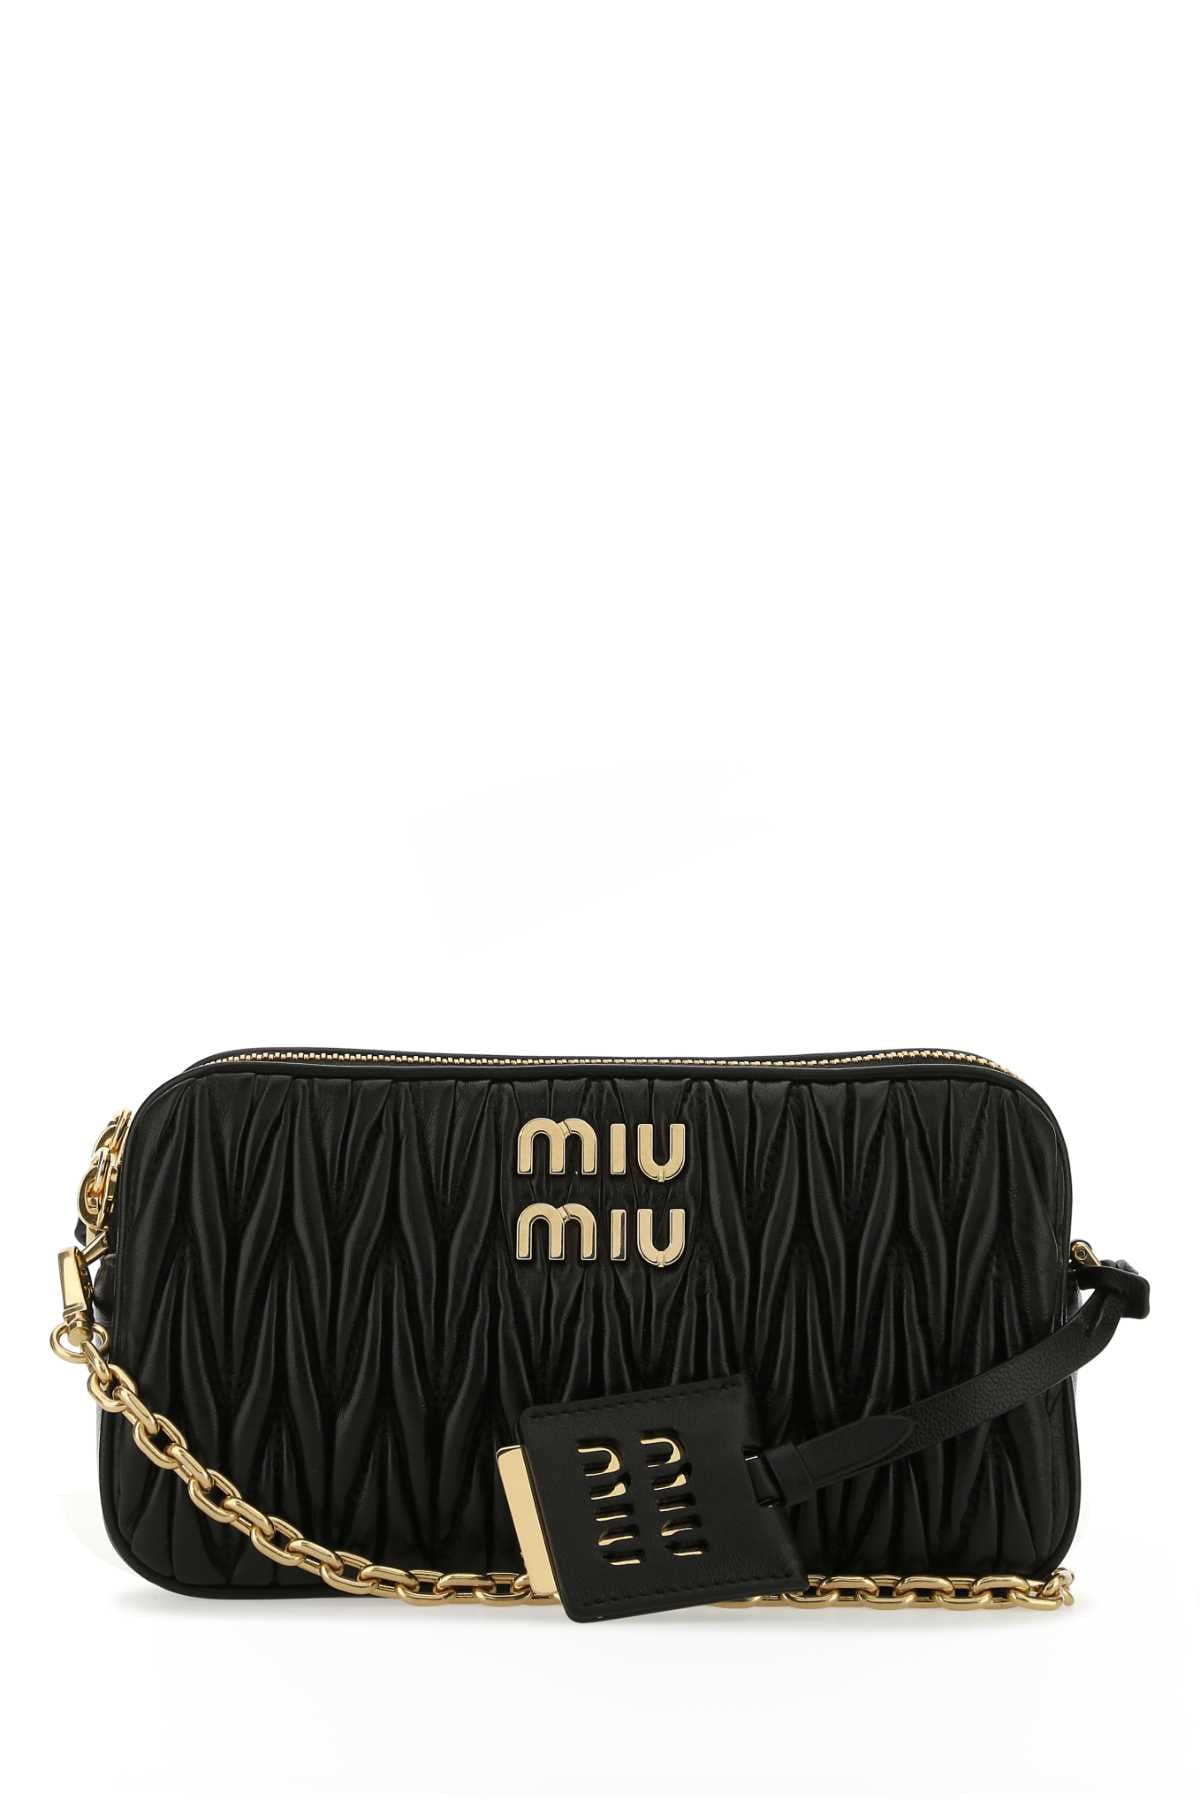 MIU MIU, Black Women's Cross-body Bags